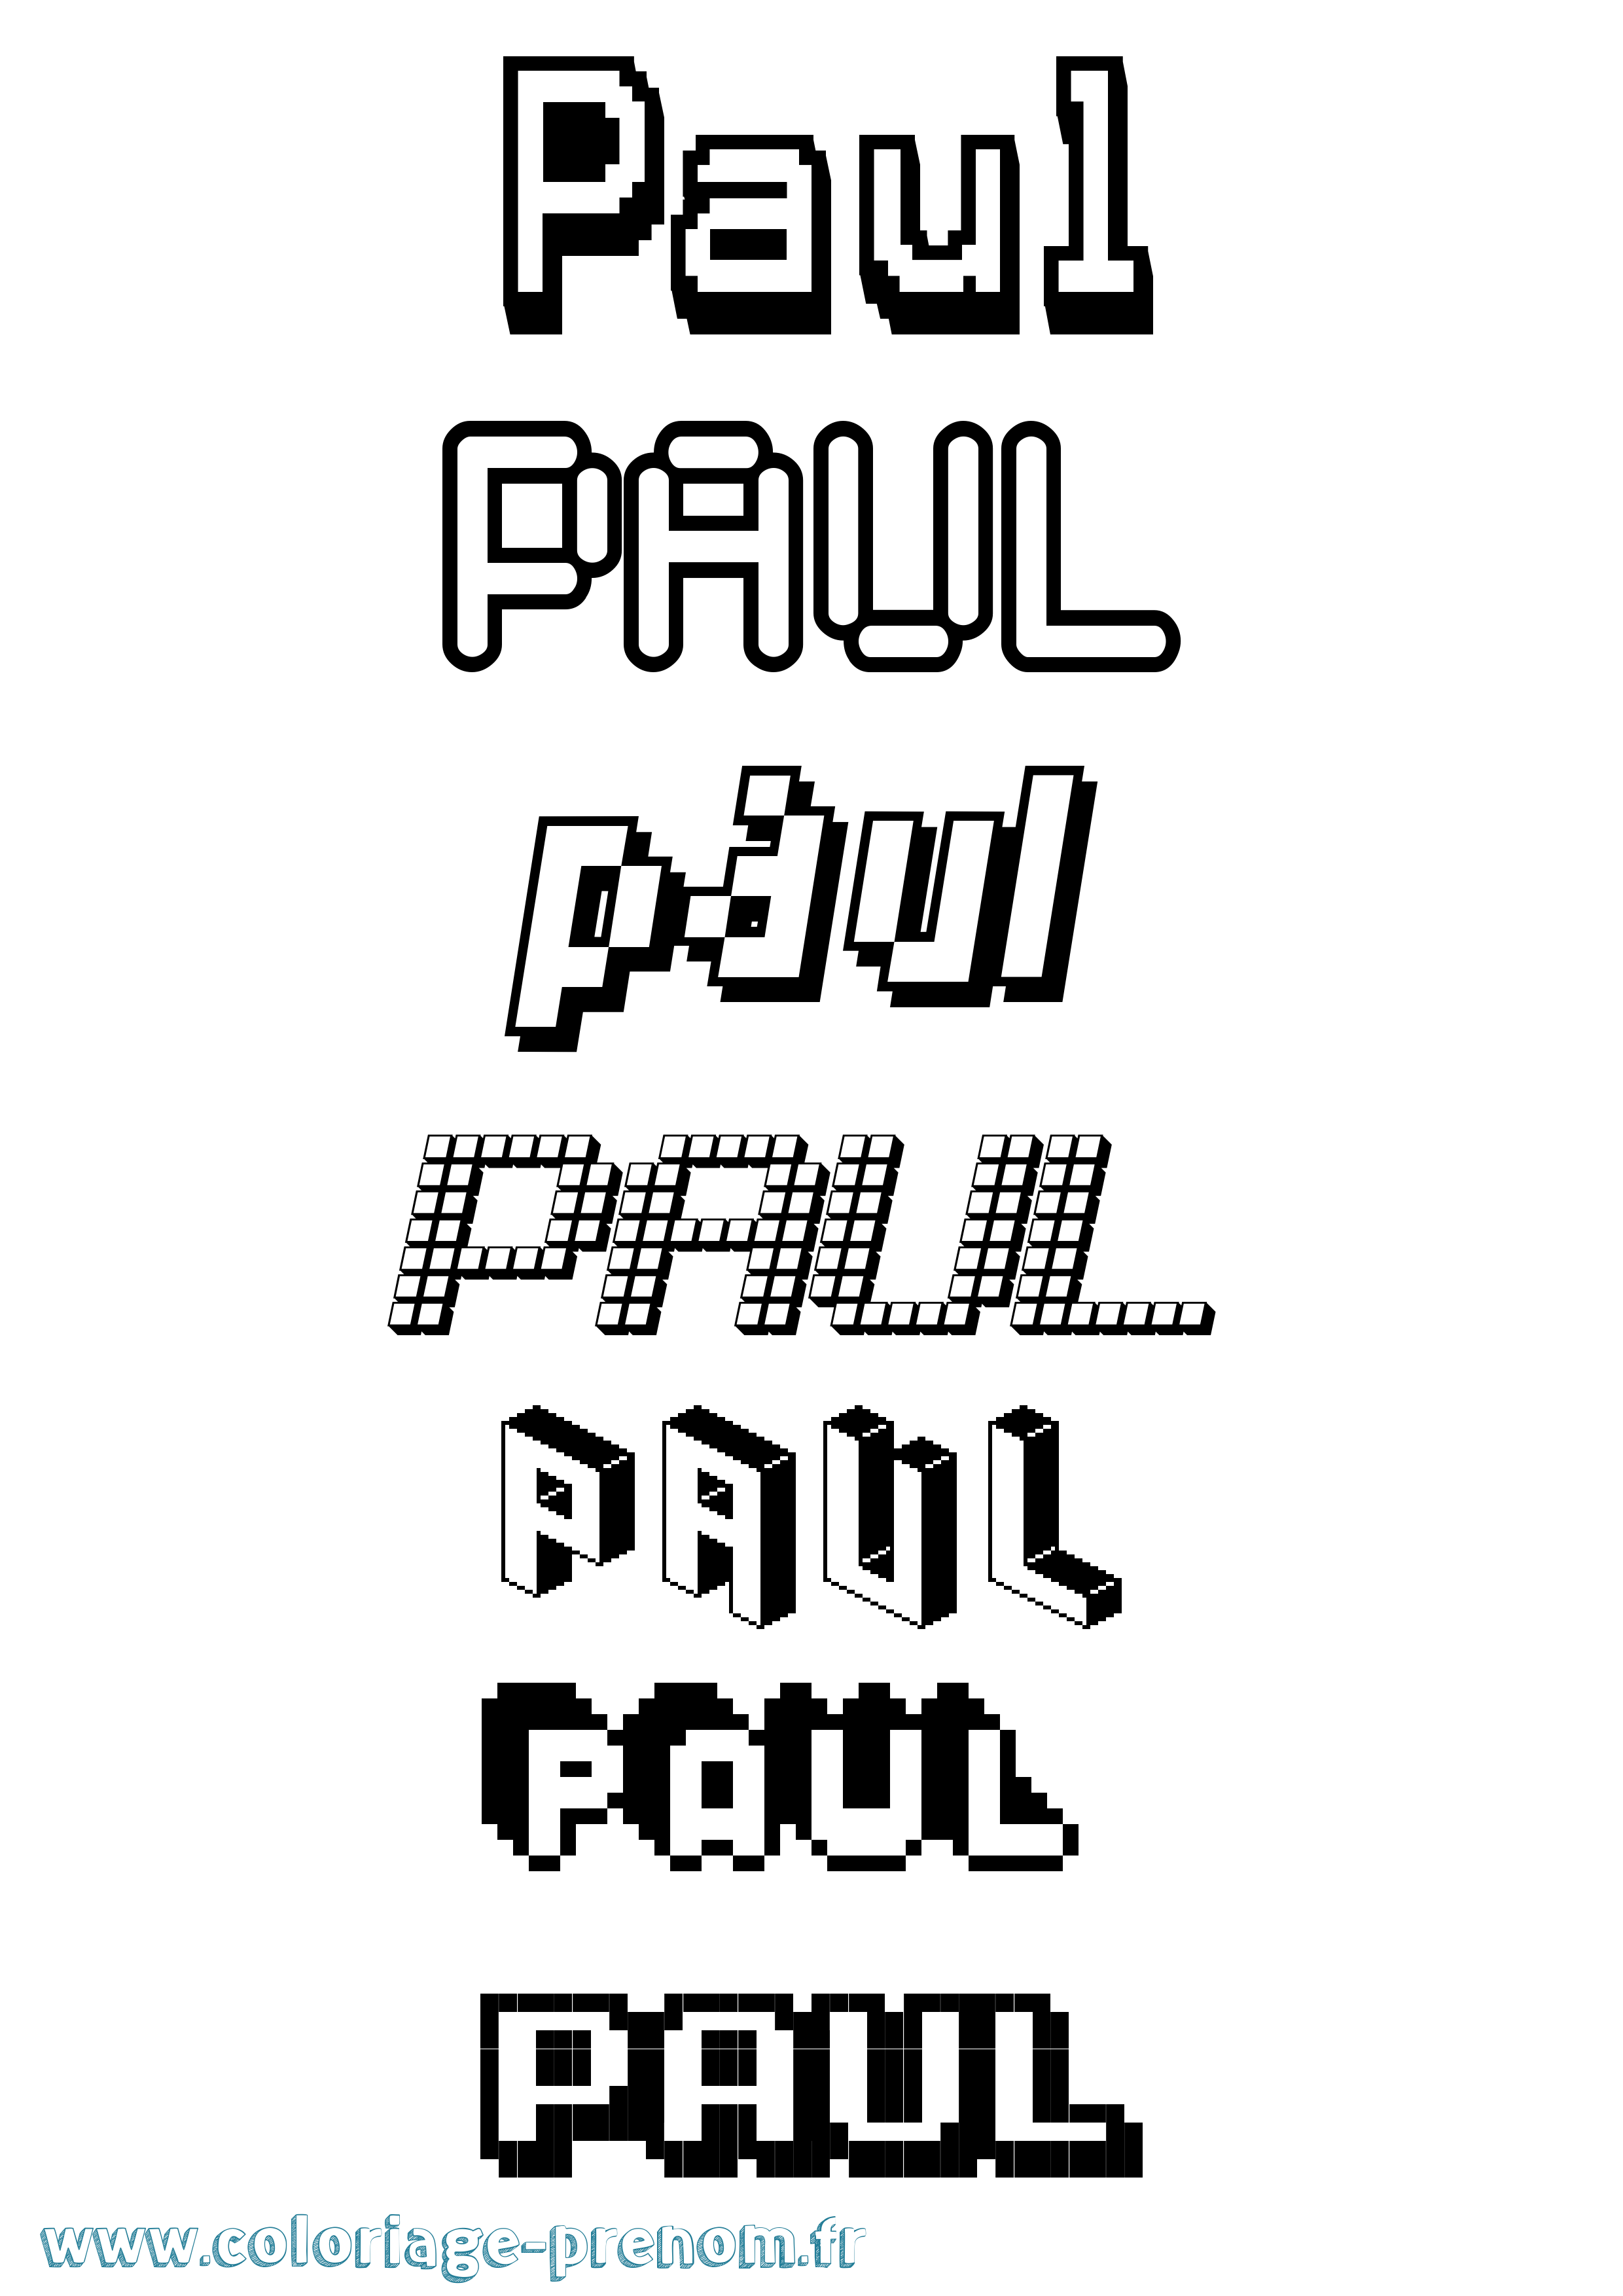 Coloriage prénom Paul Pixel